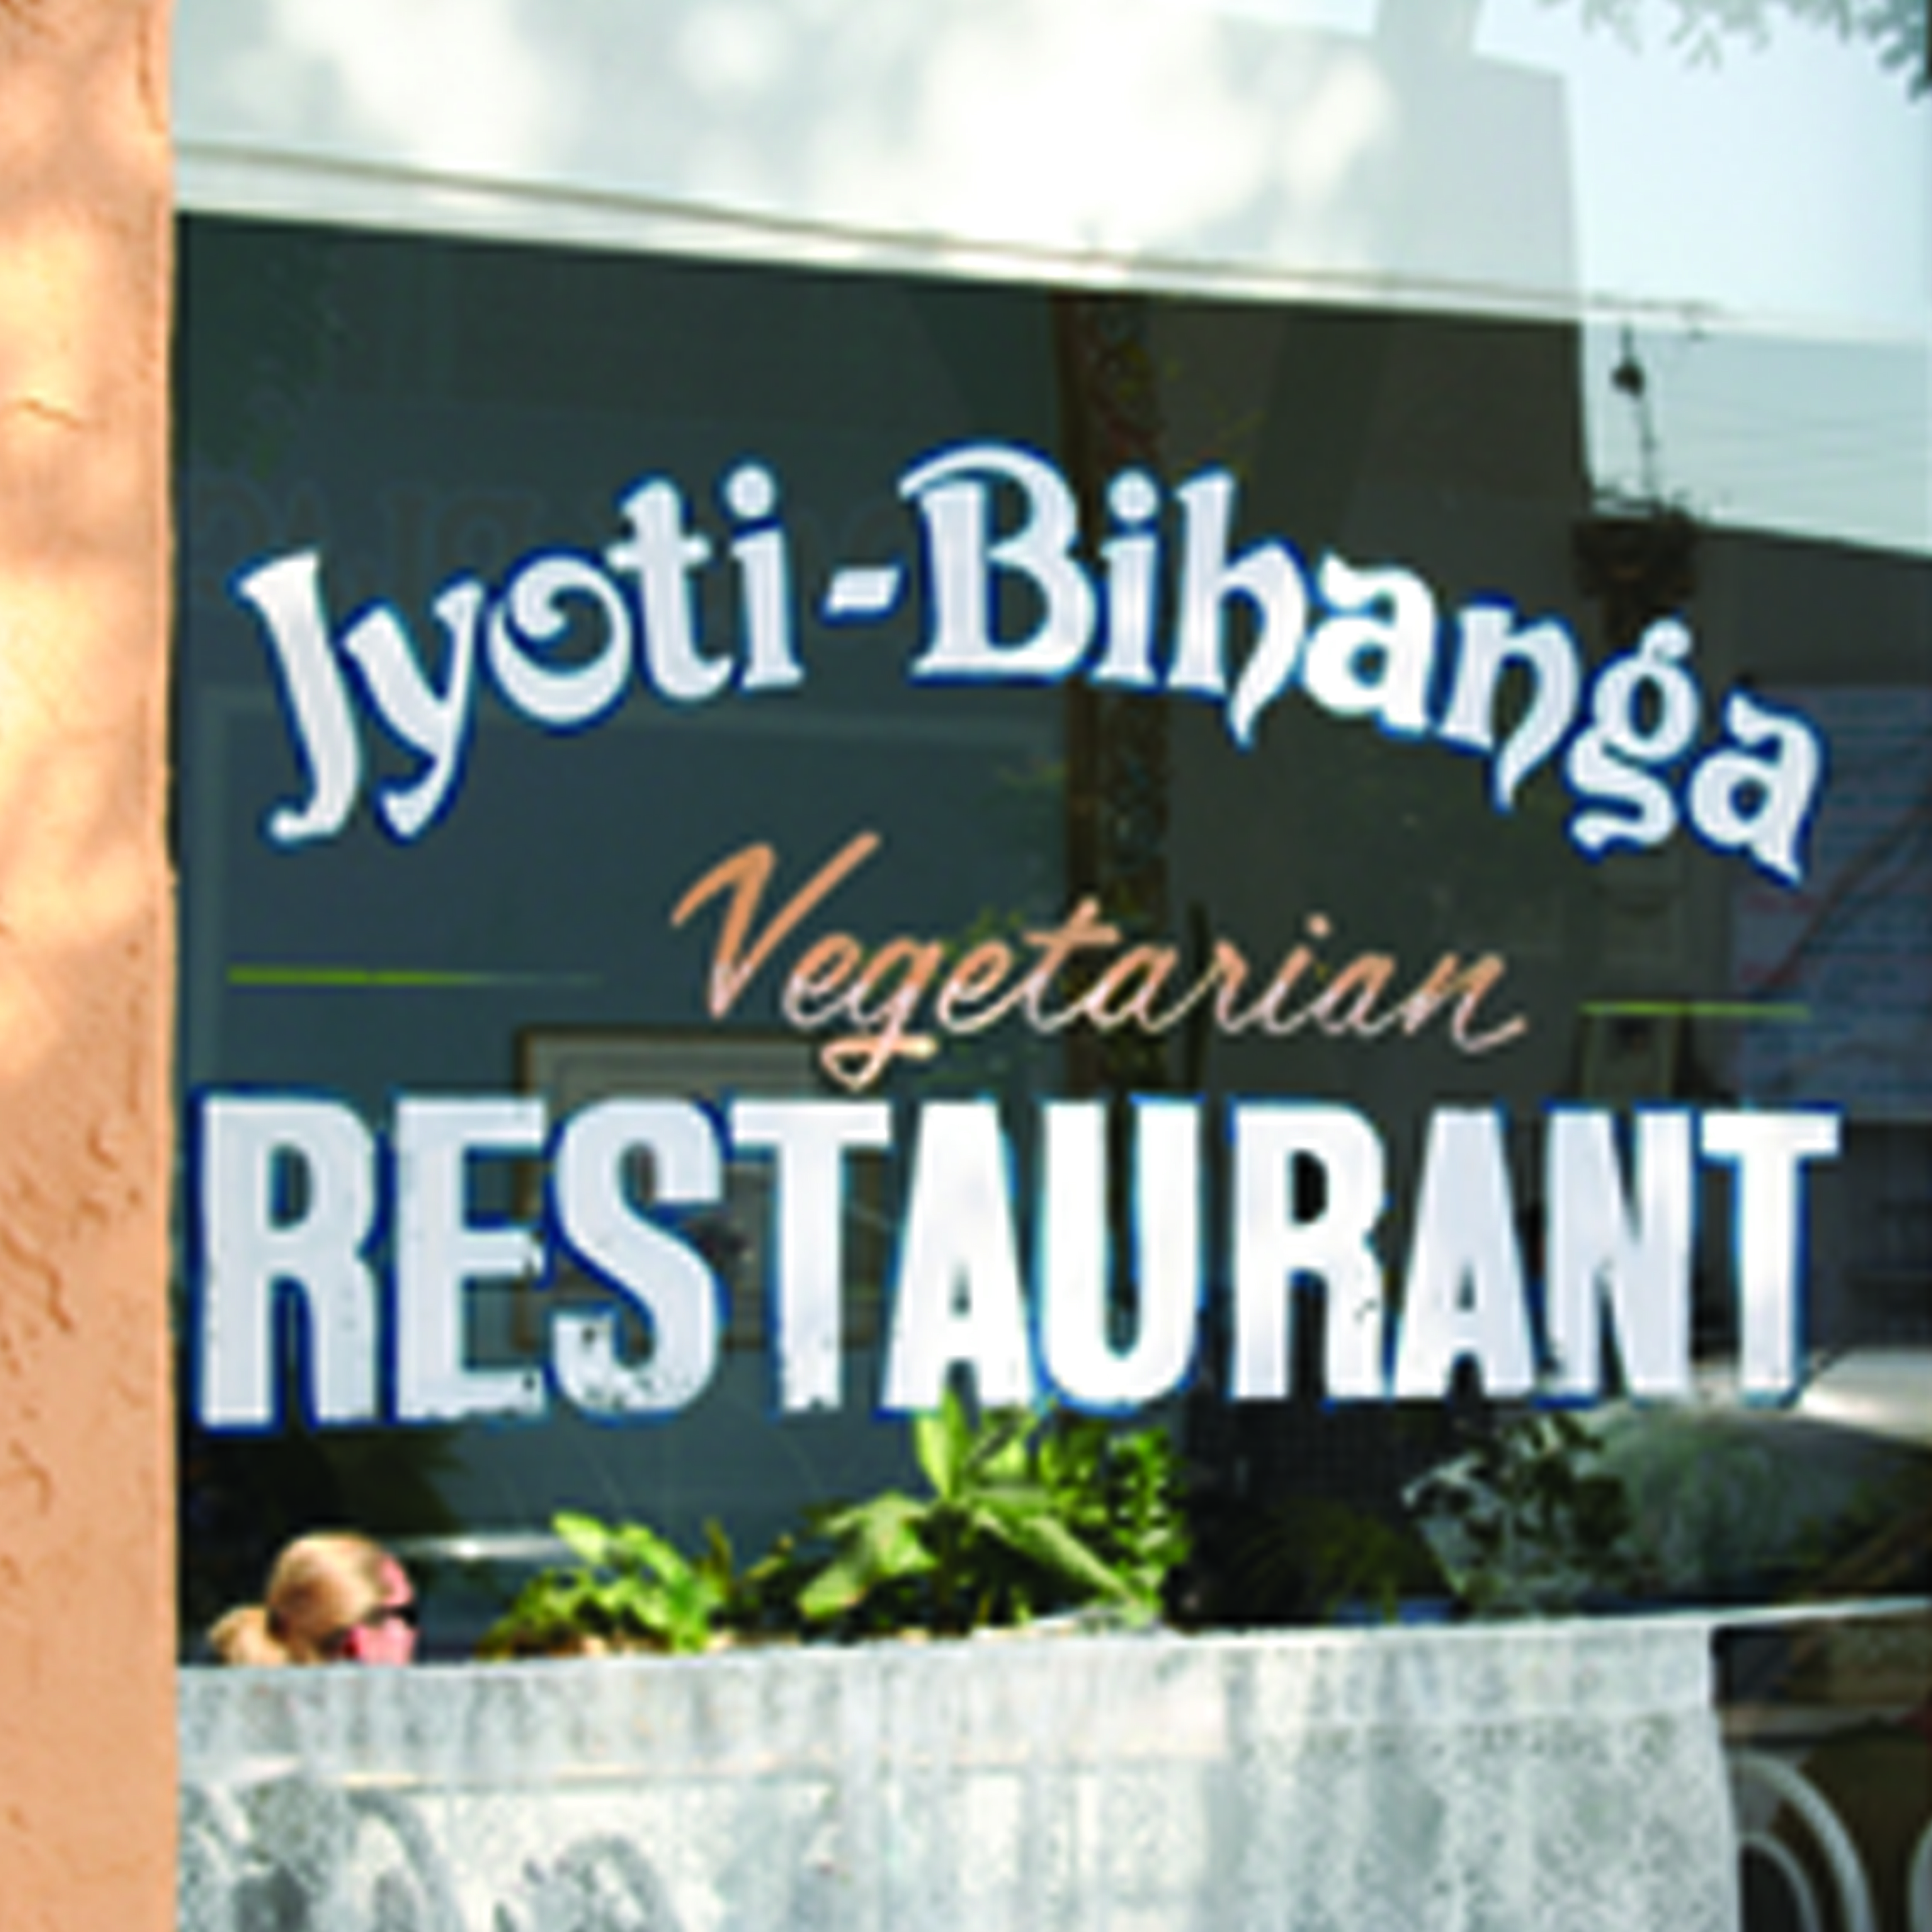 Jyoti-Bihanga